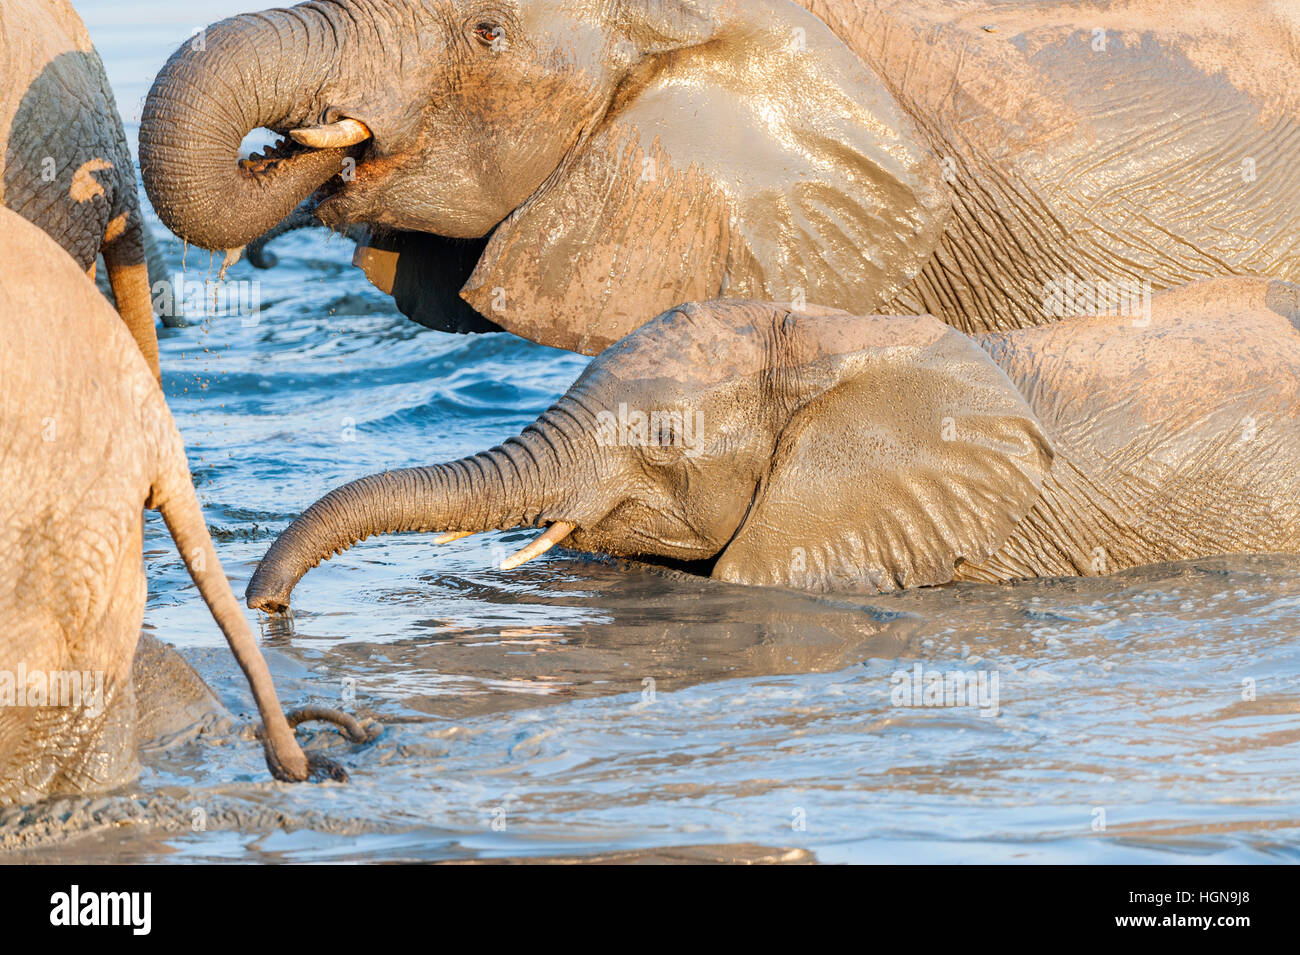 Elefante africano pan potabile piscina di acqua da bere Foto Stock